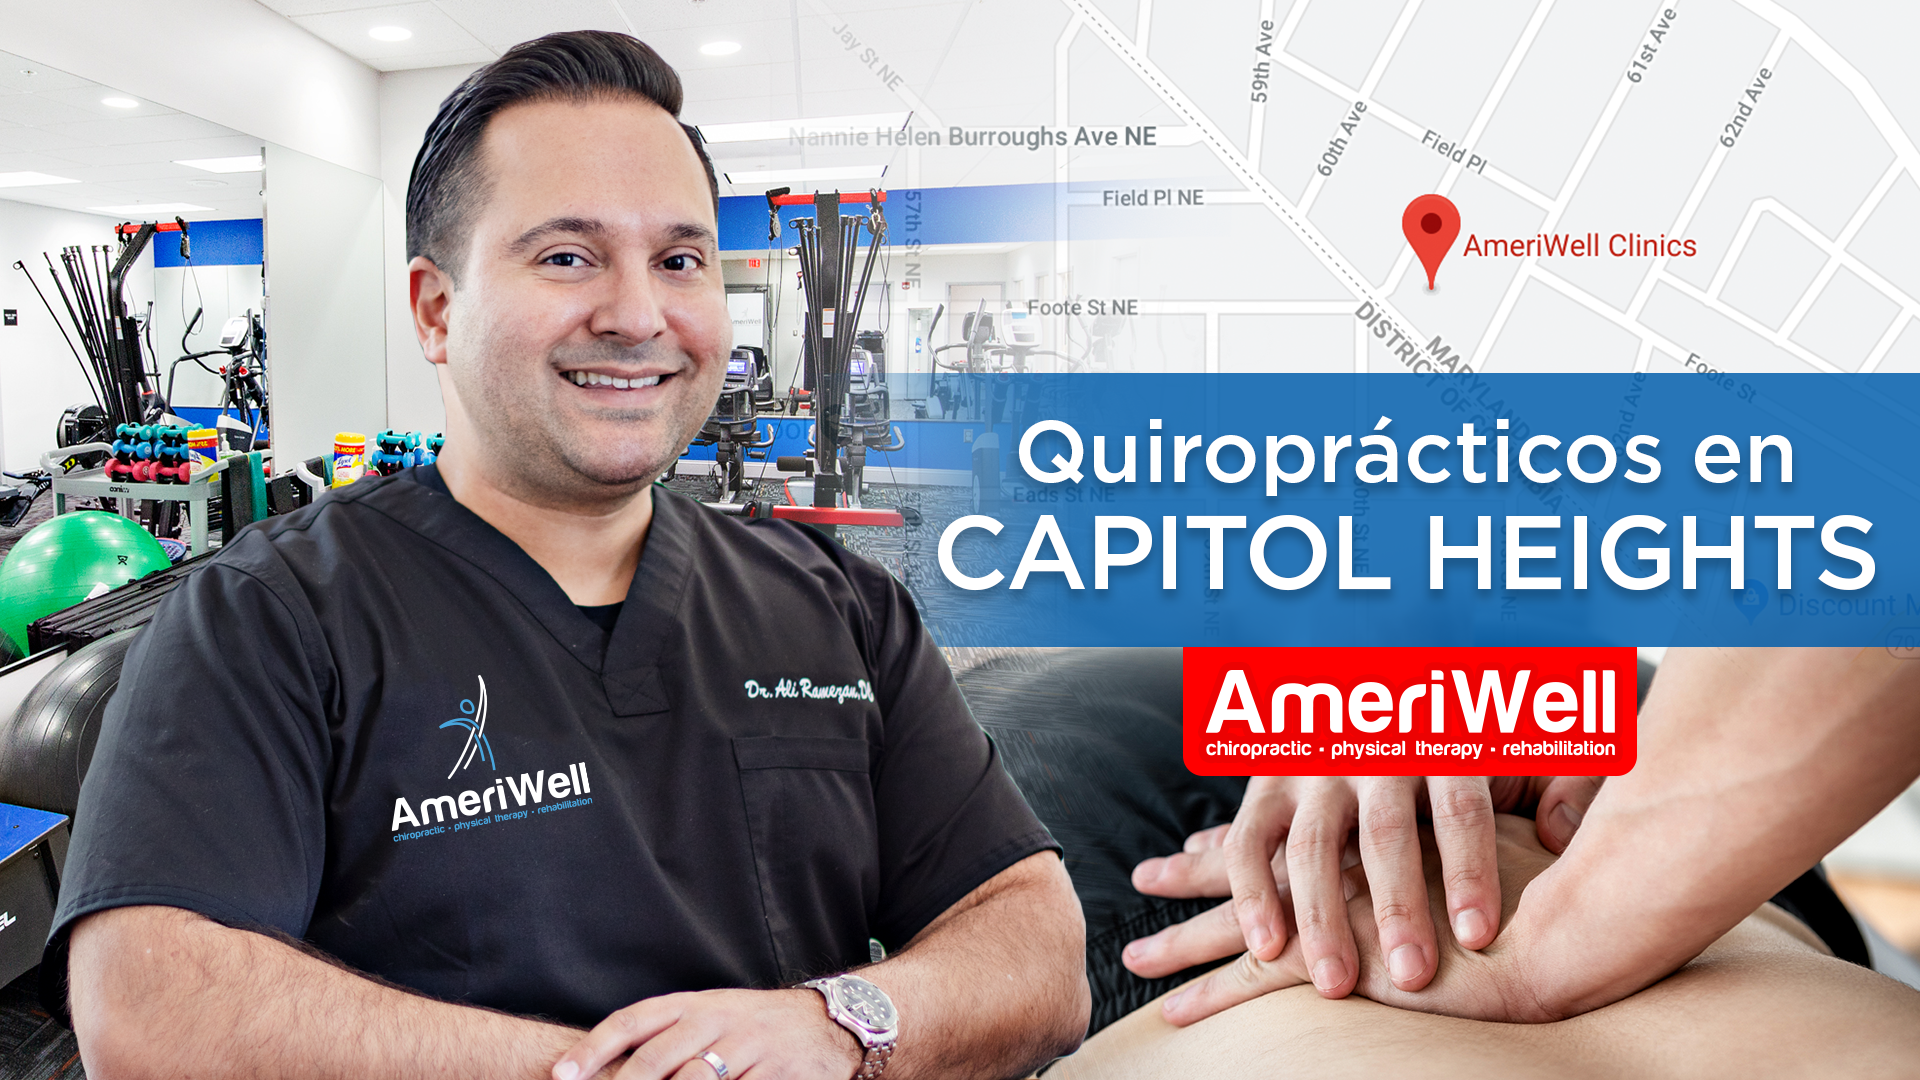 Capitol Heights – Ameriwell Clinics Los mejores Quiroprácticos